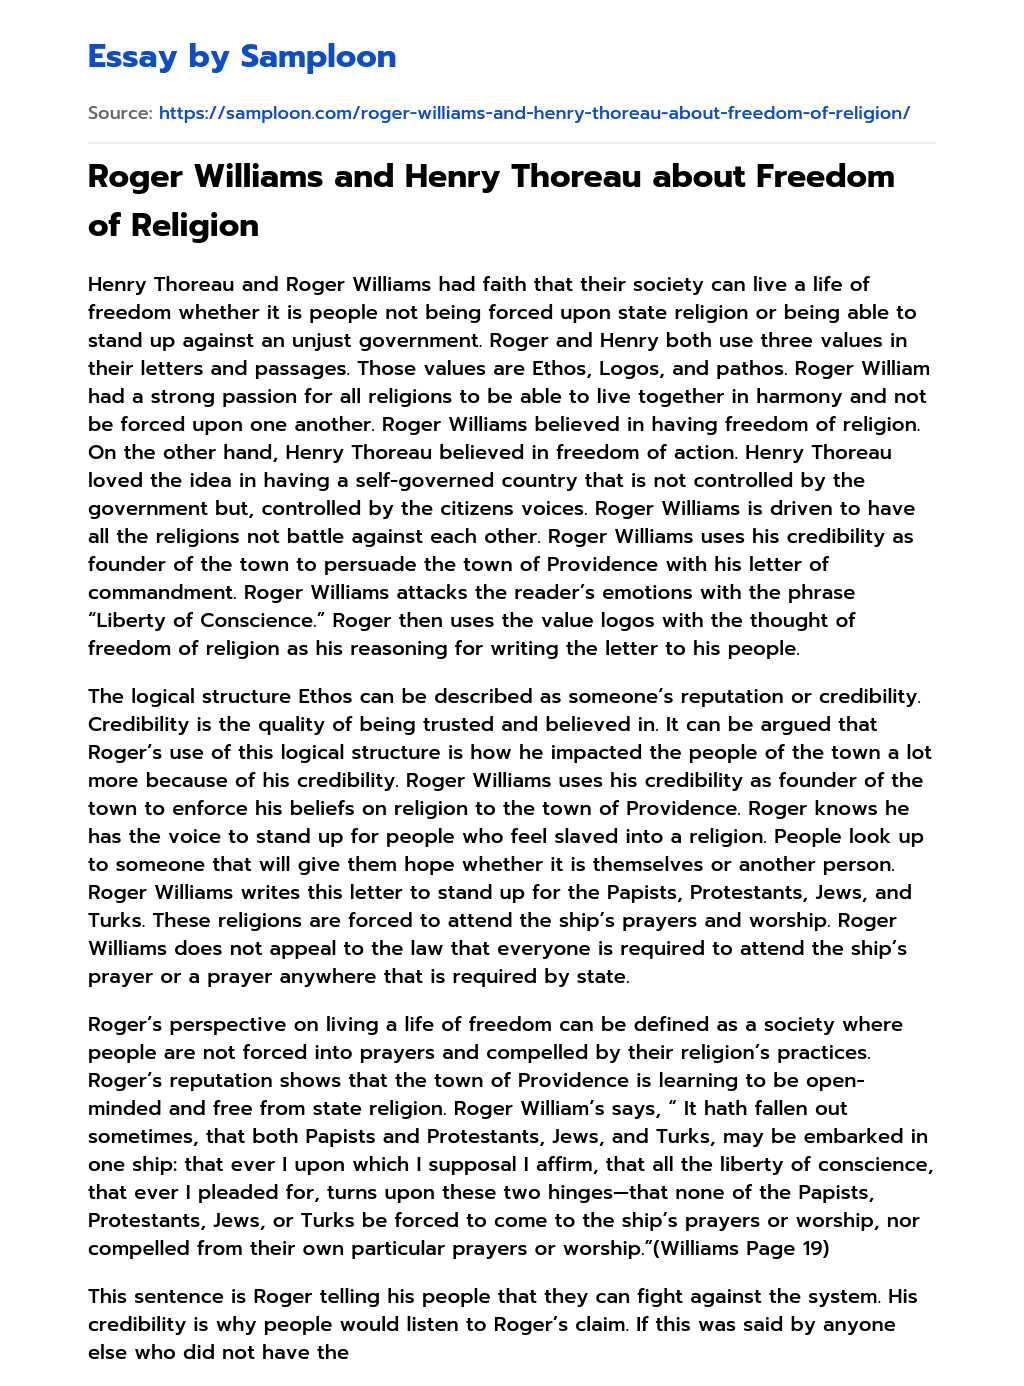 argumentative essay on freedom of religion